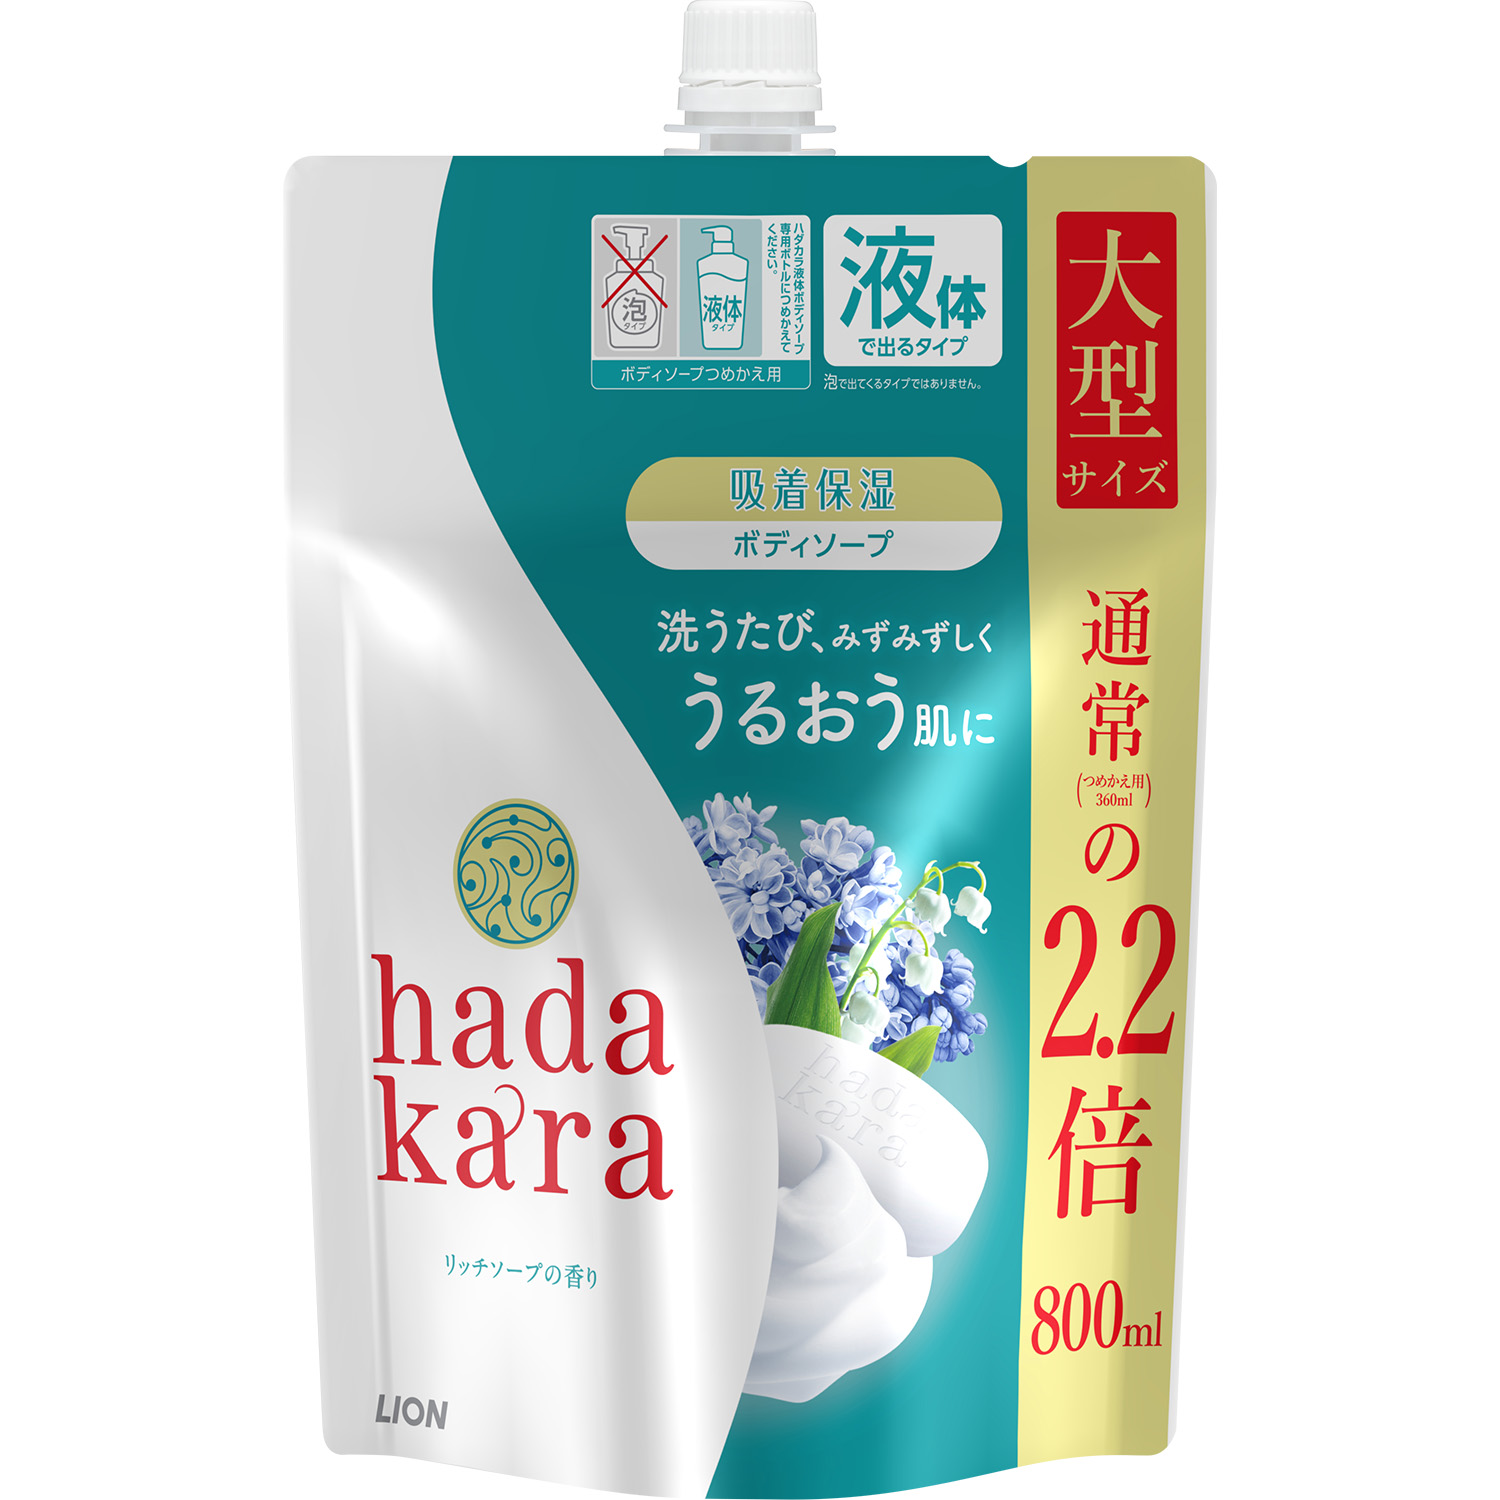 hadakara（ハダカラ）ボディソープ リッチソープの香り 詰替え用 大型サイズ 800ml 【ボディソープ】